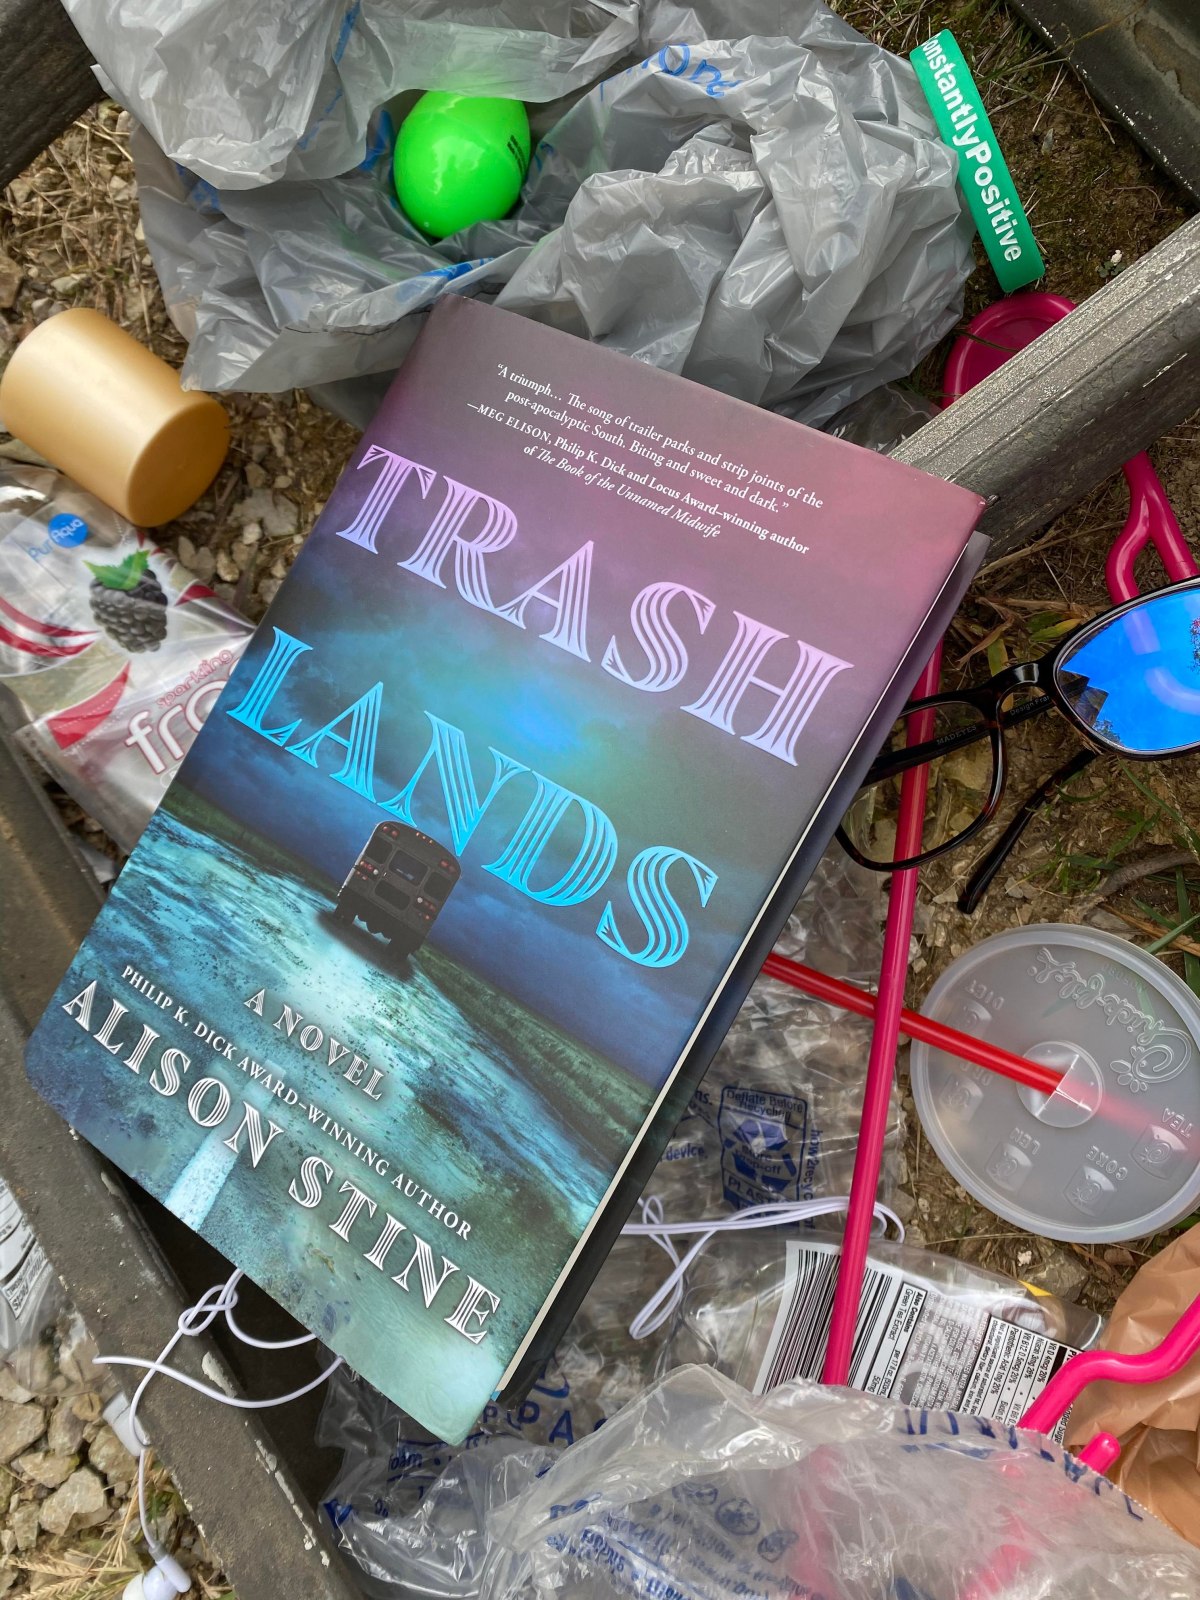 Alison Stine Explores “Trashlands”